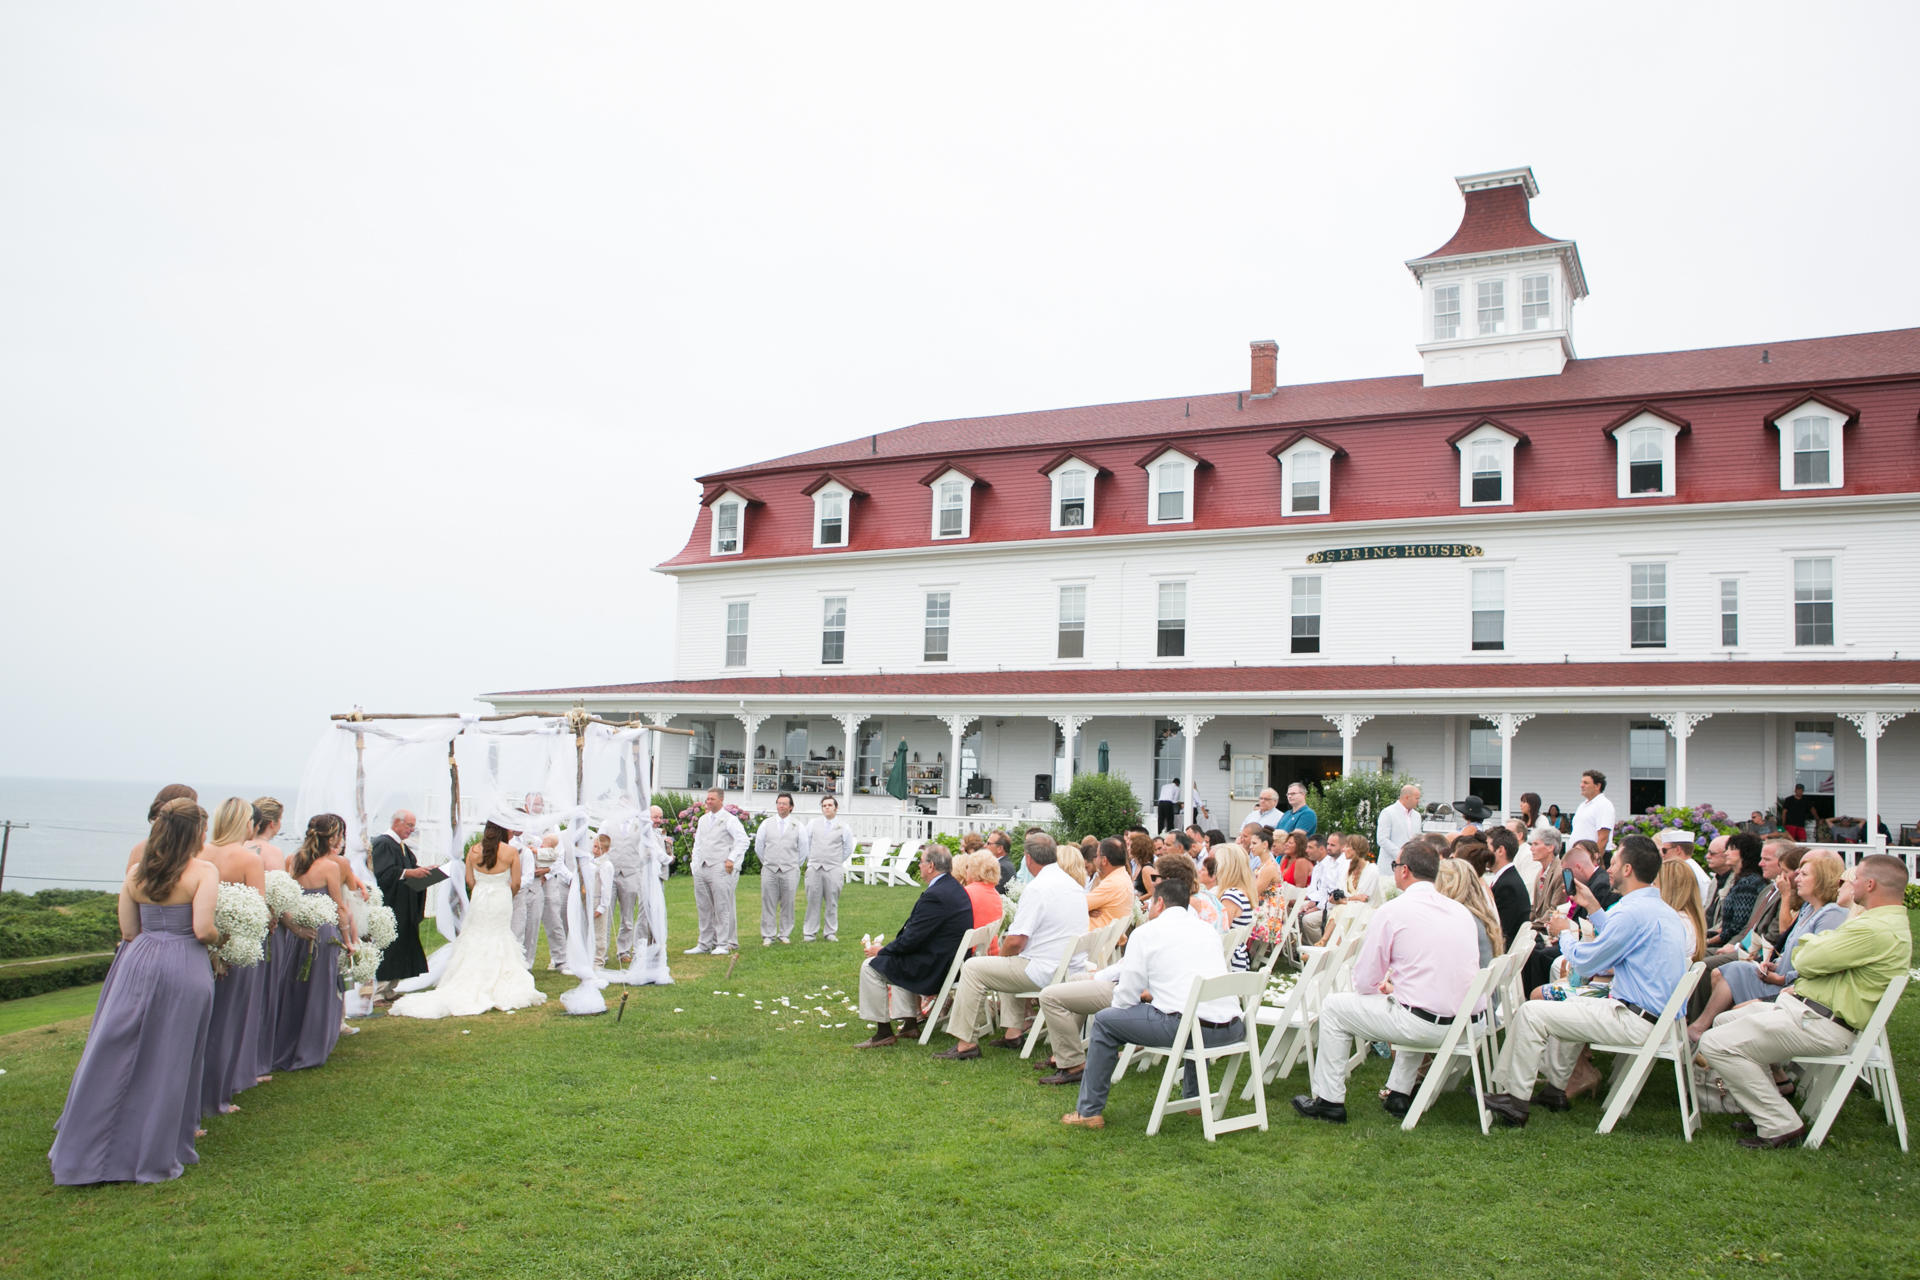  A wedding ceremony near the ocean in New York, showcasing the venue 